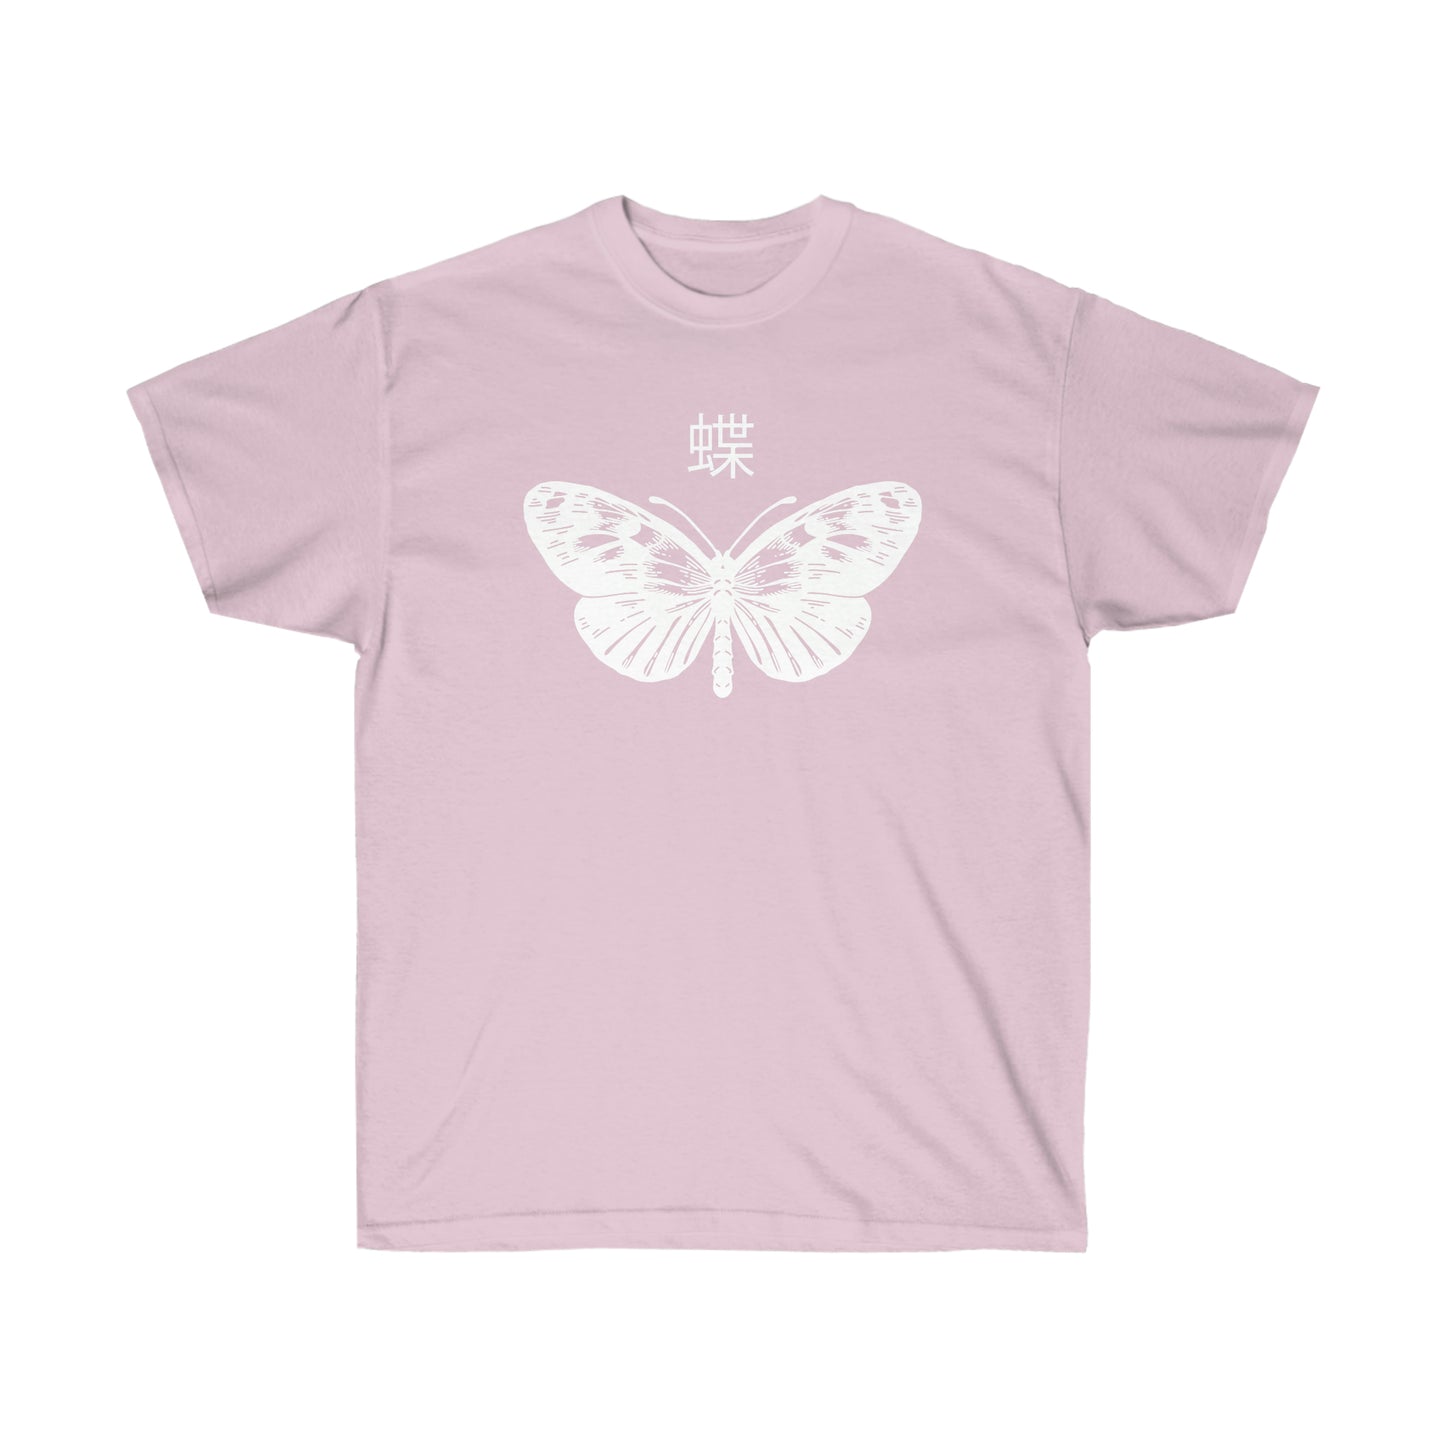 Butterfly shirt Death Moth shirt Alternative Clothing, Grunge T-shirt death J-Fashion e-girl Goth Japan Streetwear Edgy Japanese Apparel Metal